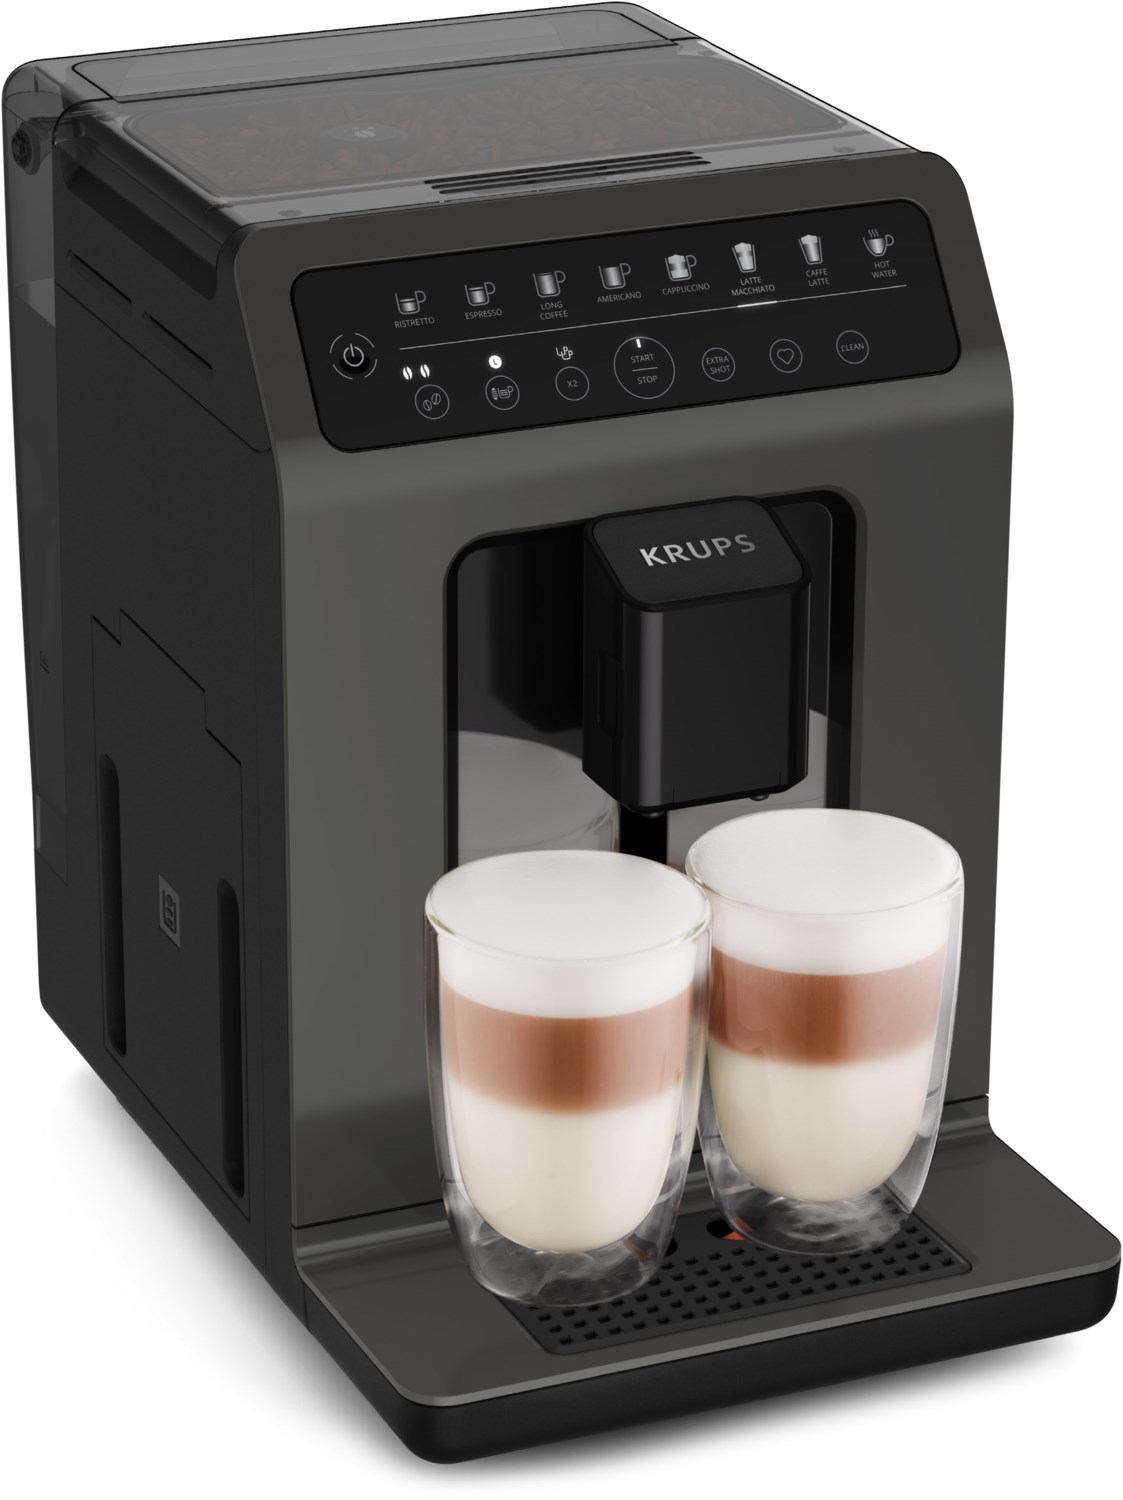 Krups Superautomatische Kaffeemaschine Ea89zb10